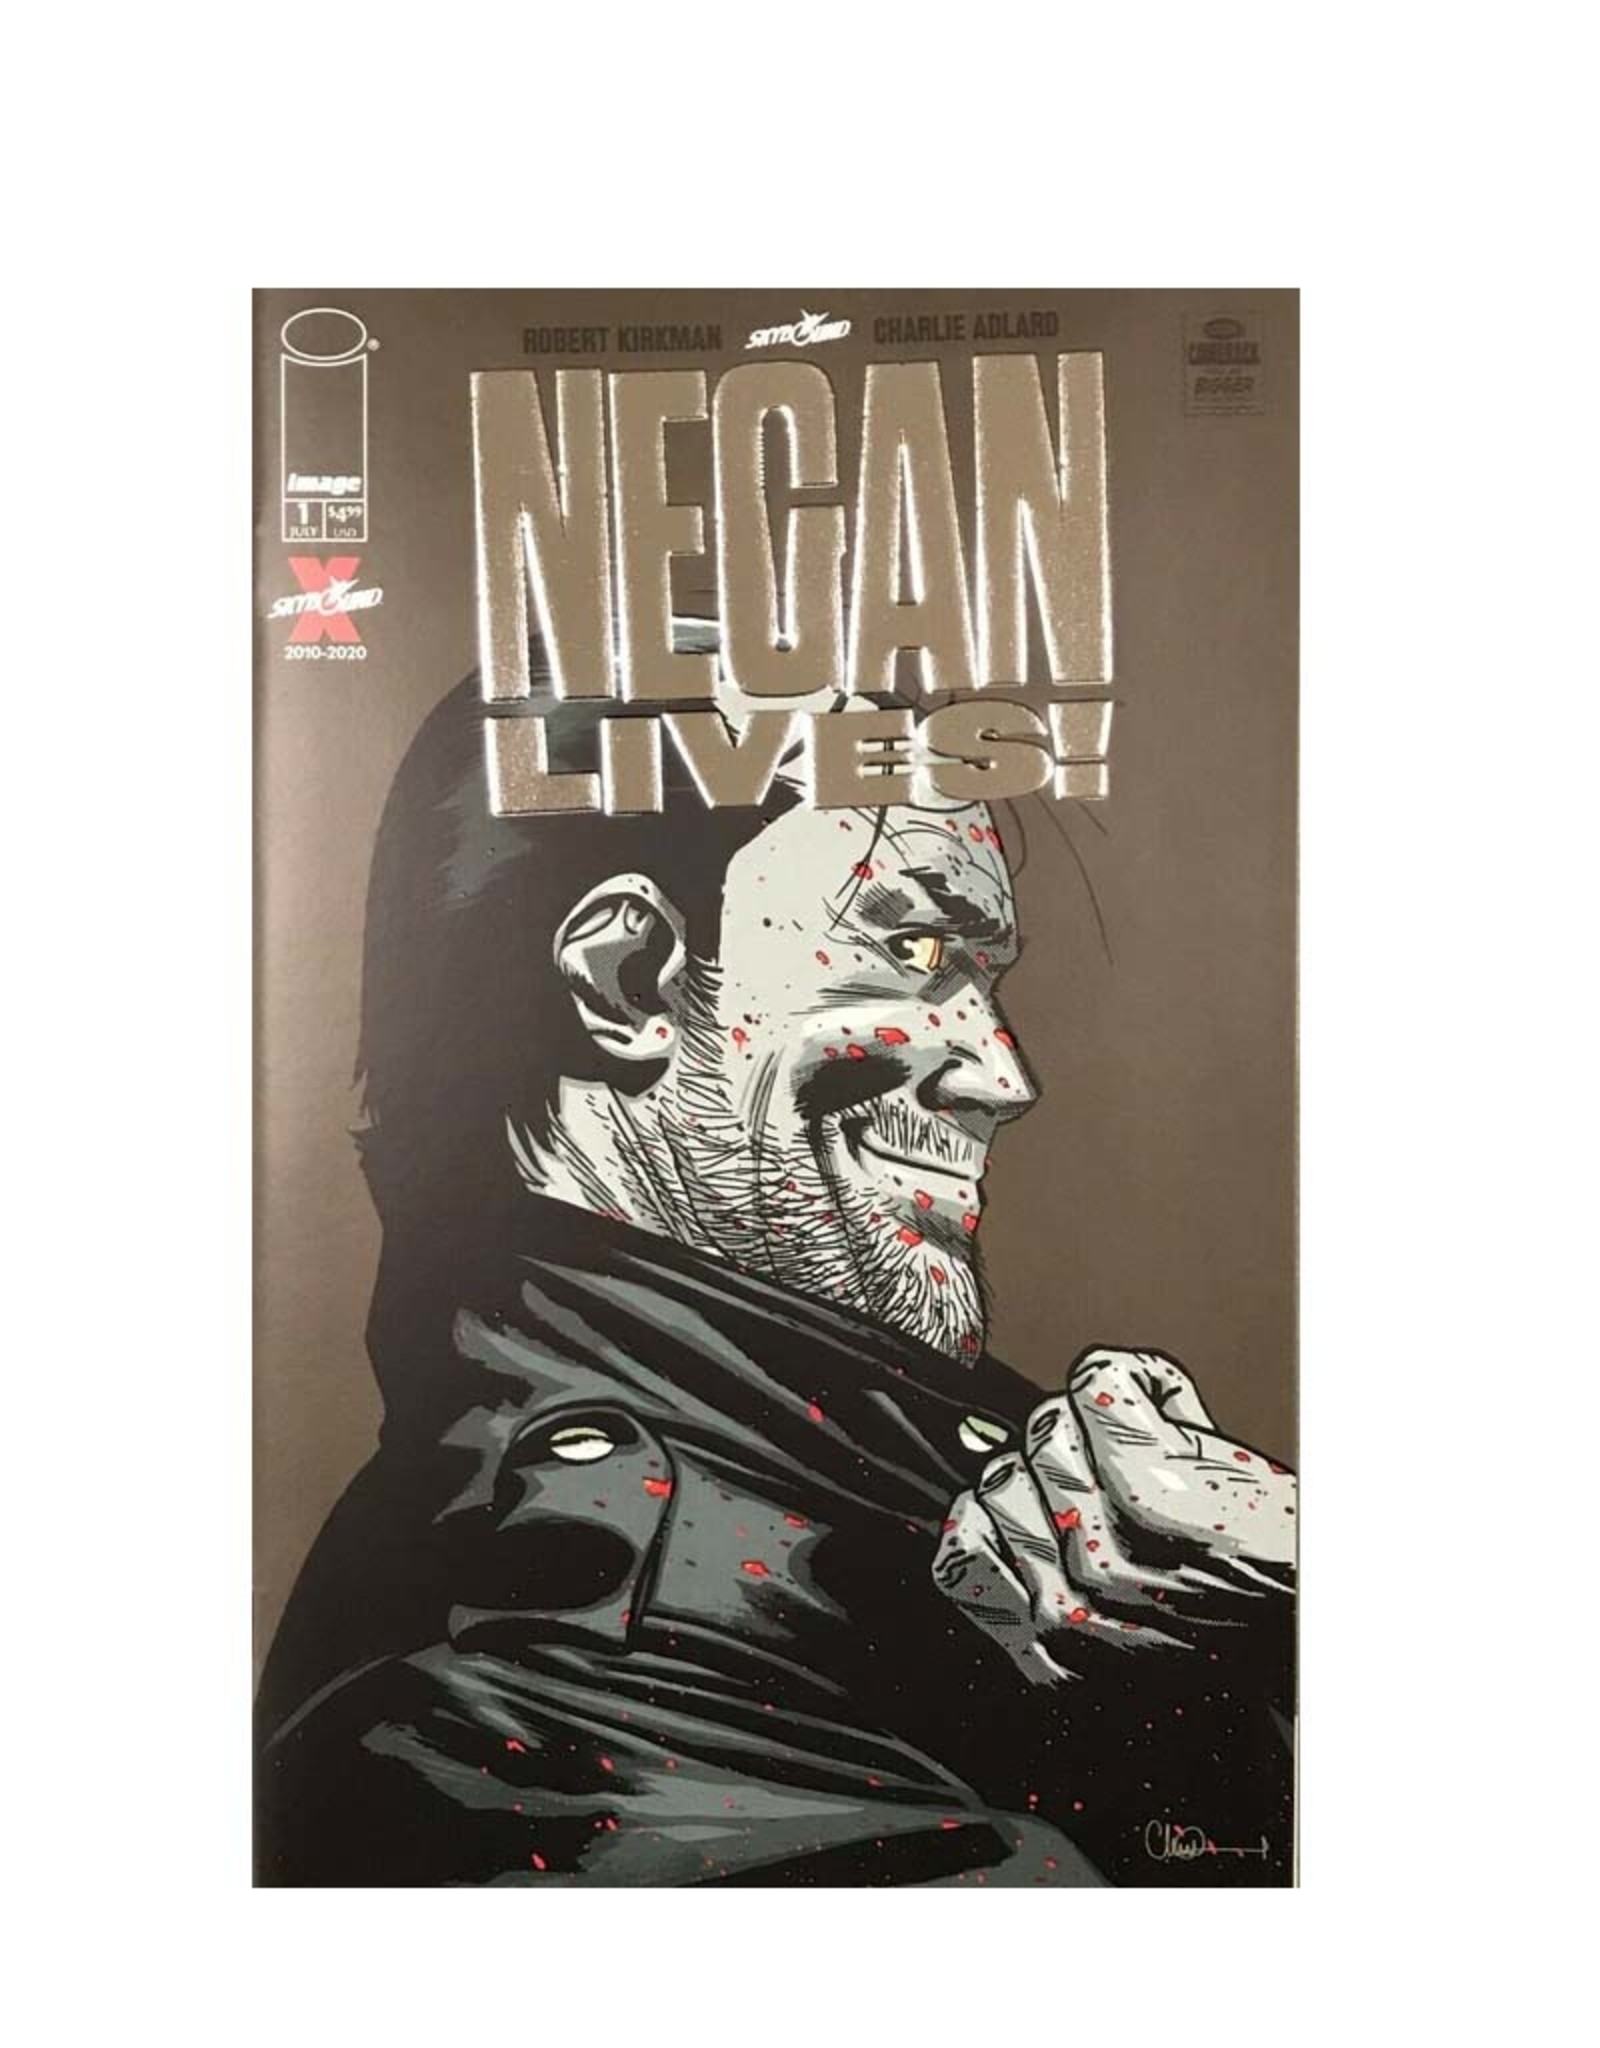 Image Comics Negan Lives #1 Silver Variant